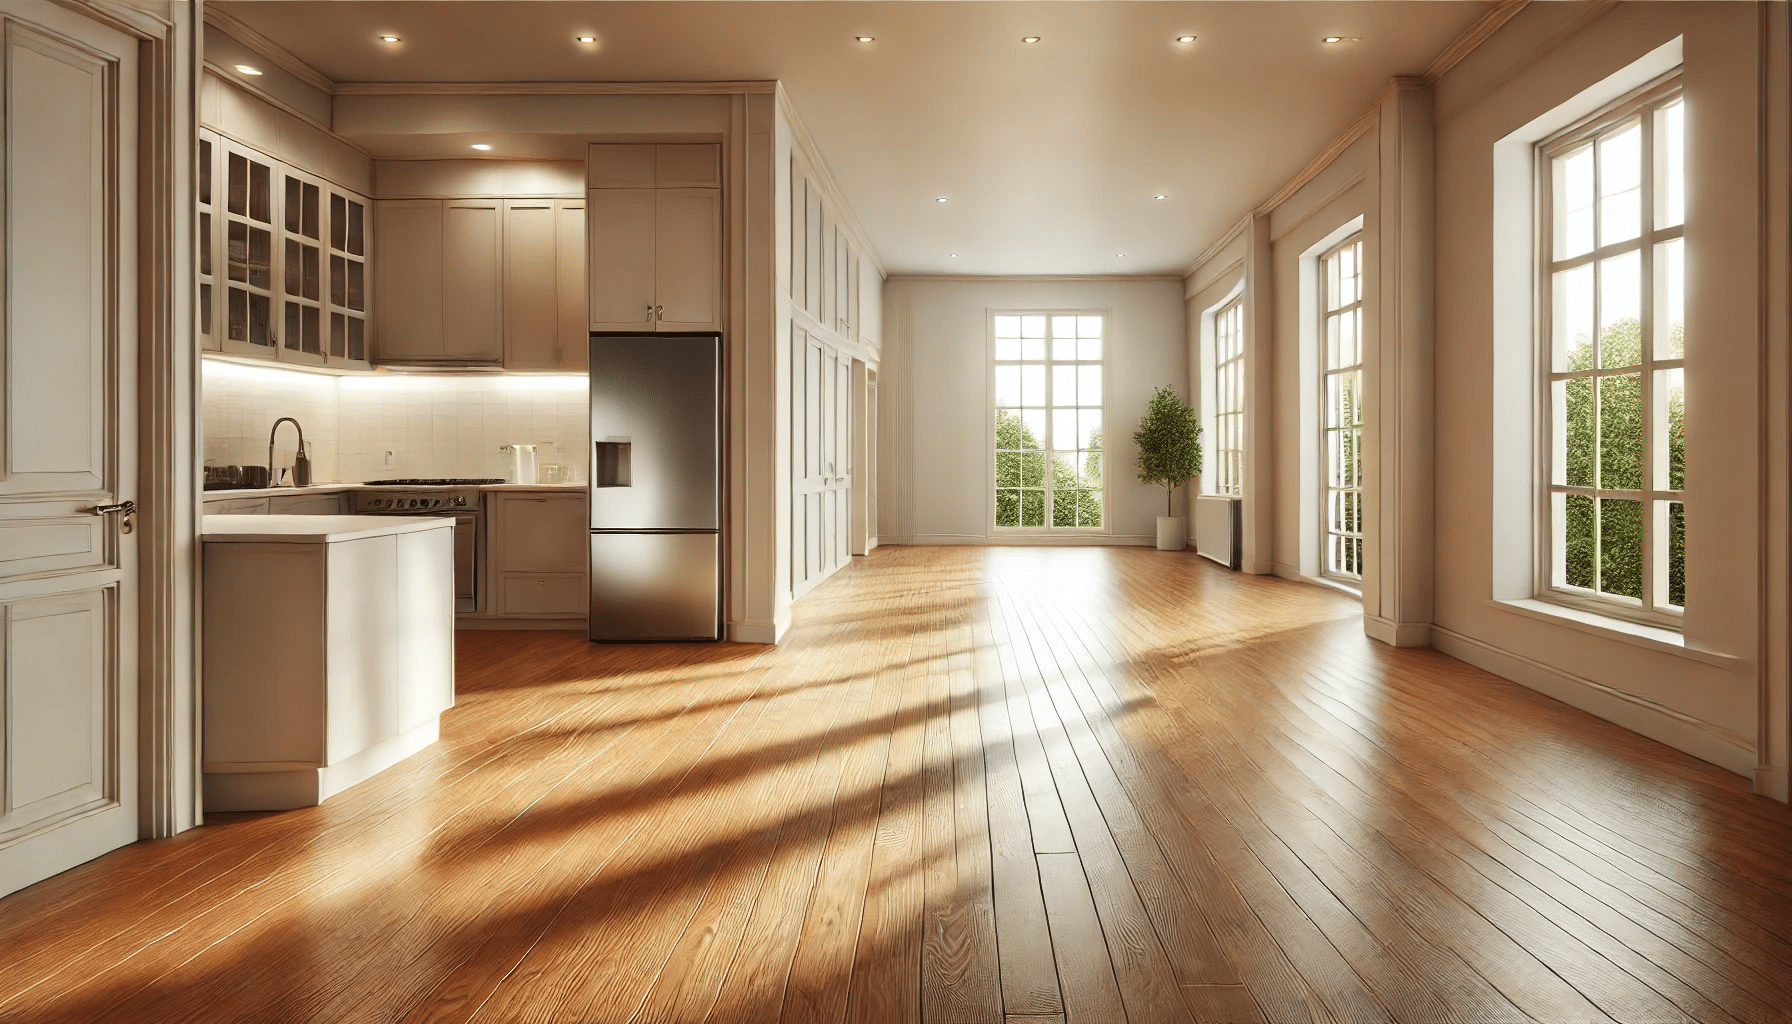 Selling an Empty House – Is it Easier?